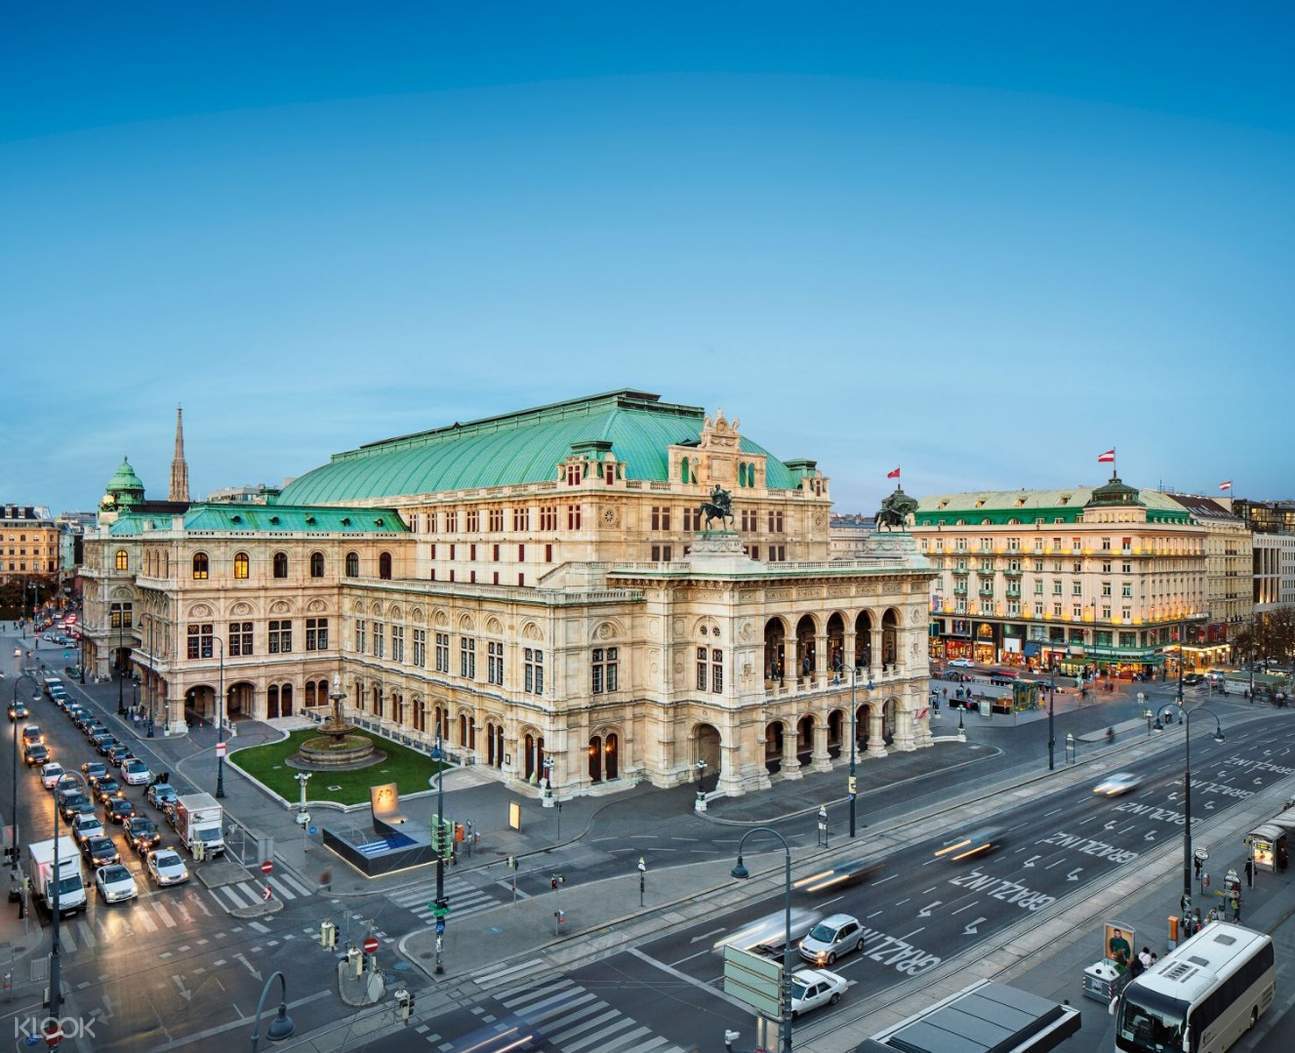 Opera House in Vienna